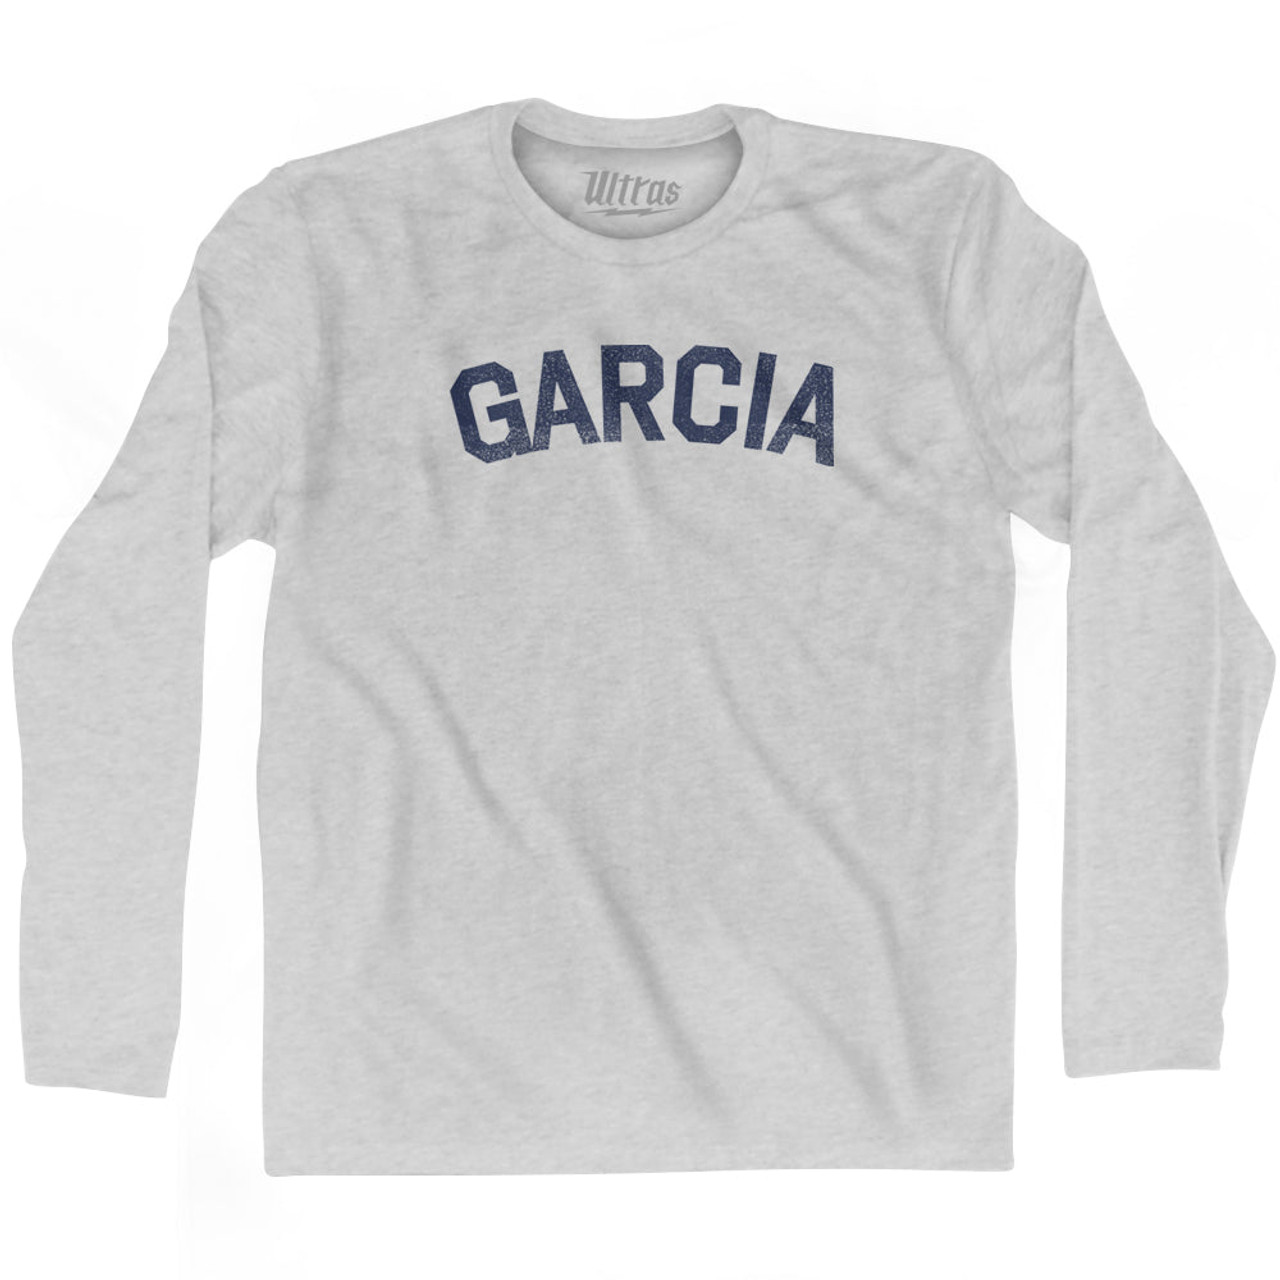 T-shirt - Adult Long Heather Grey Sleeve GARCIA Cotton